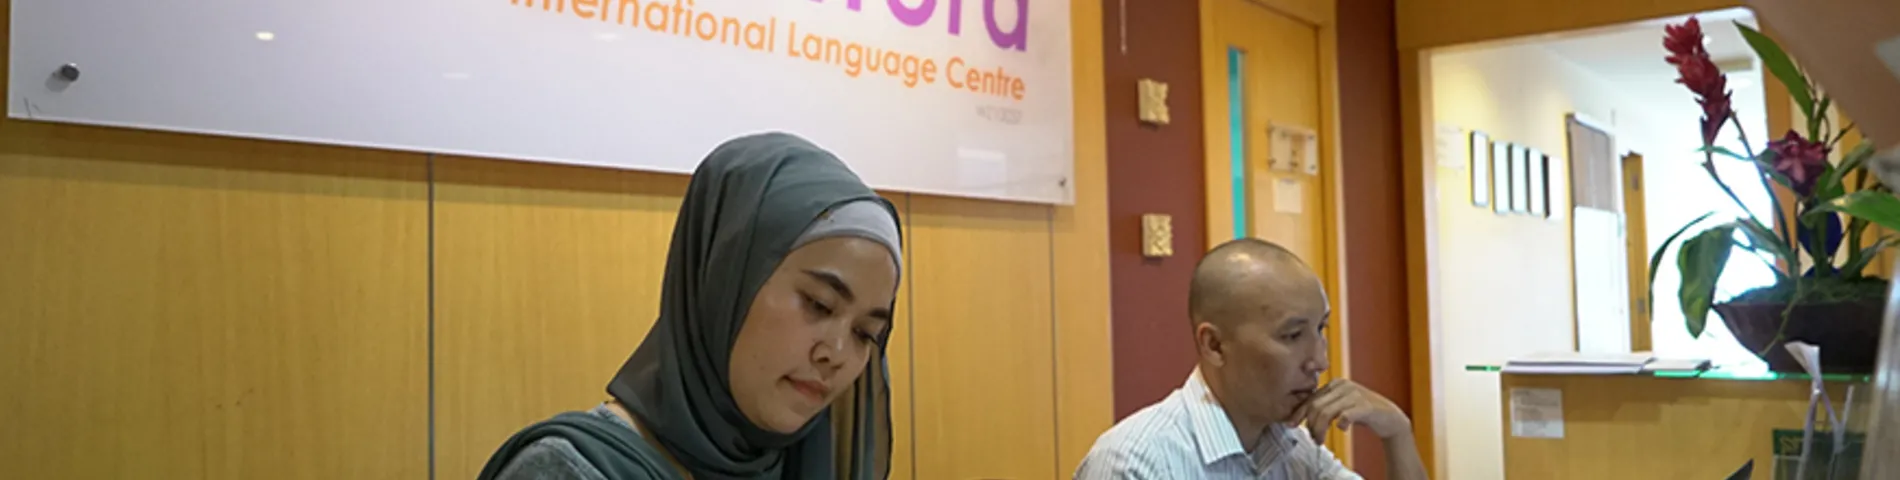 Stratford International Language Centre รูปภาพ 1